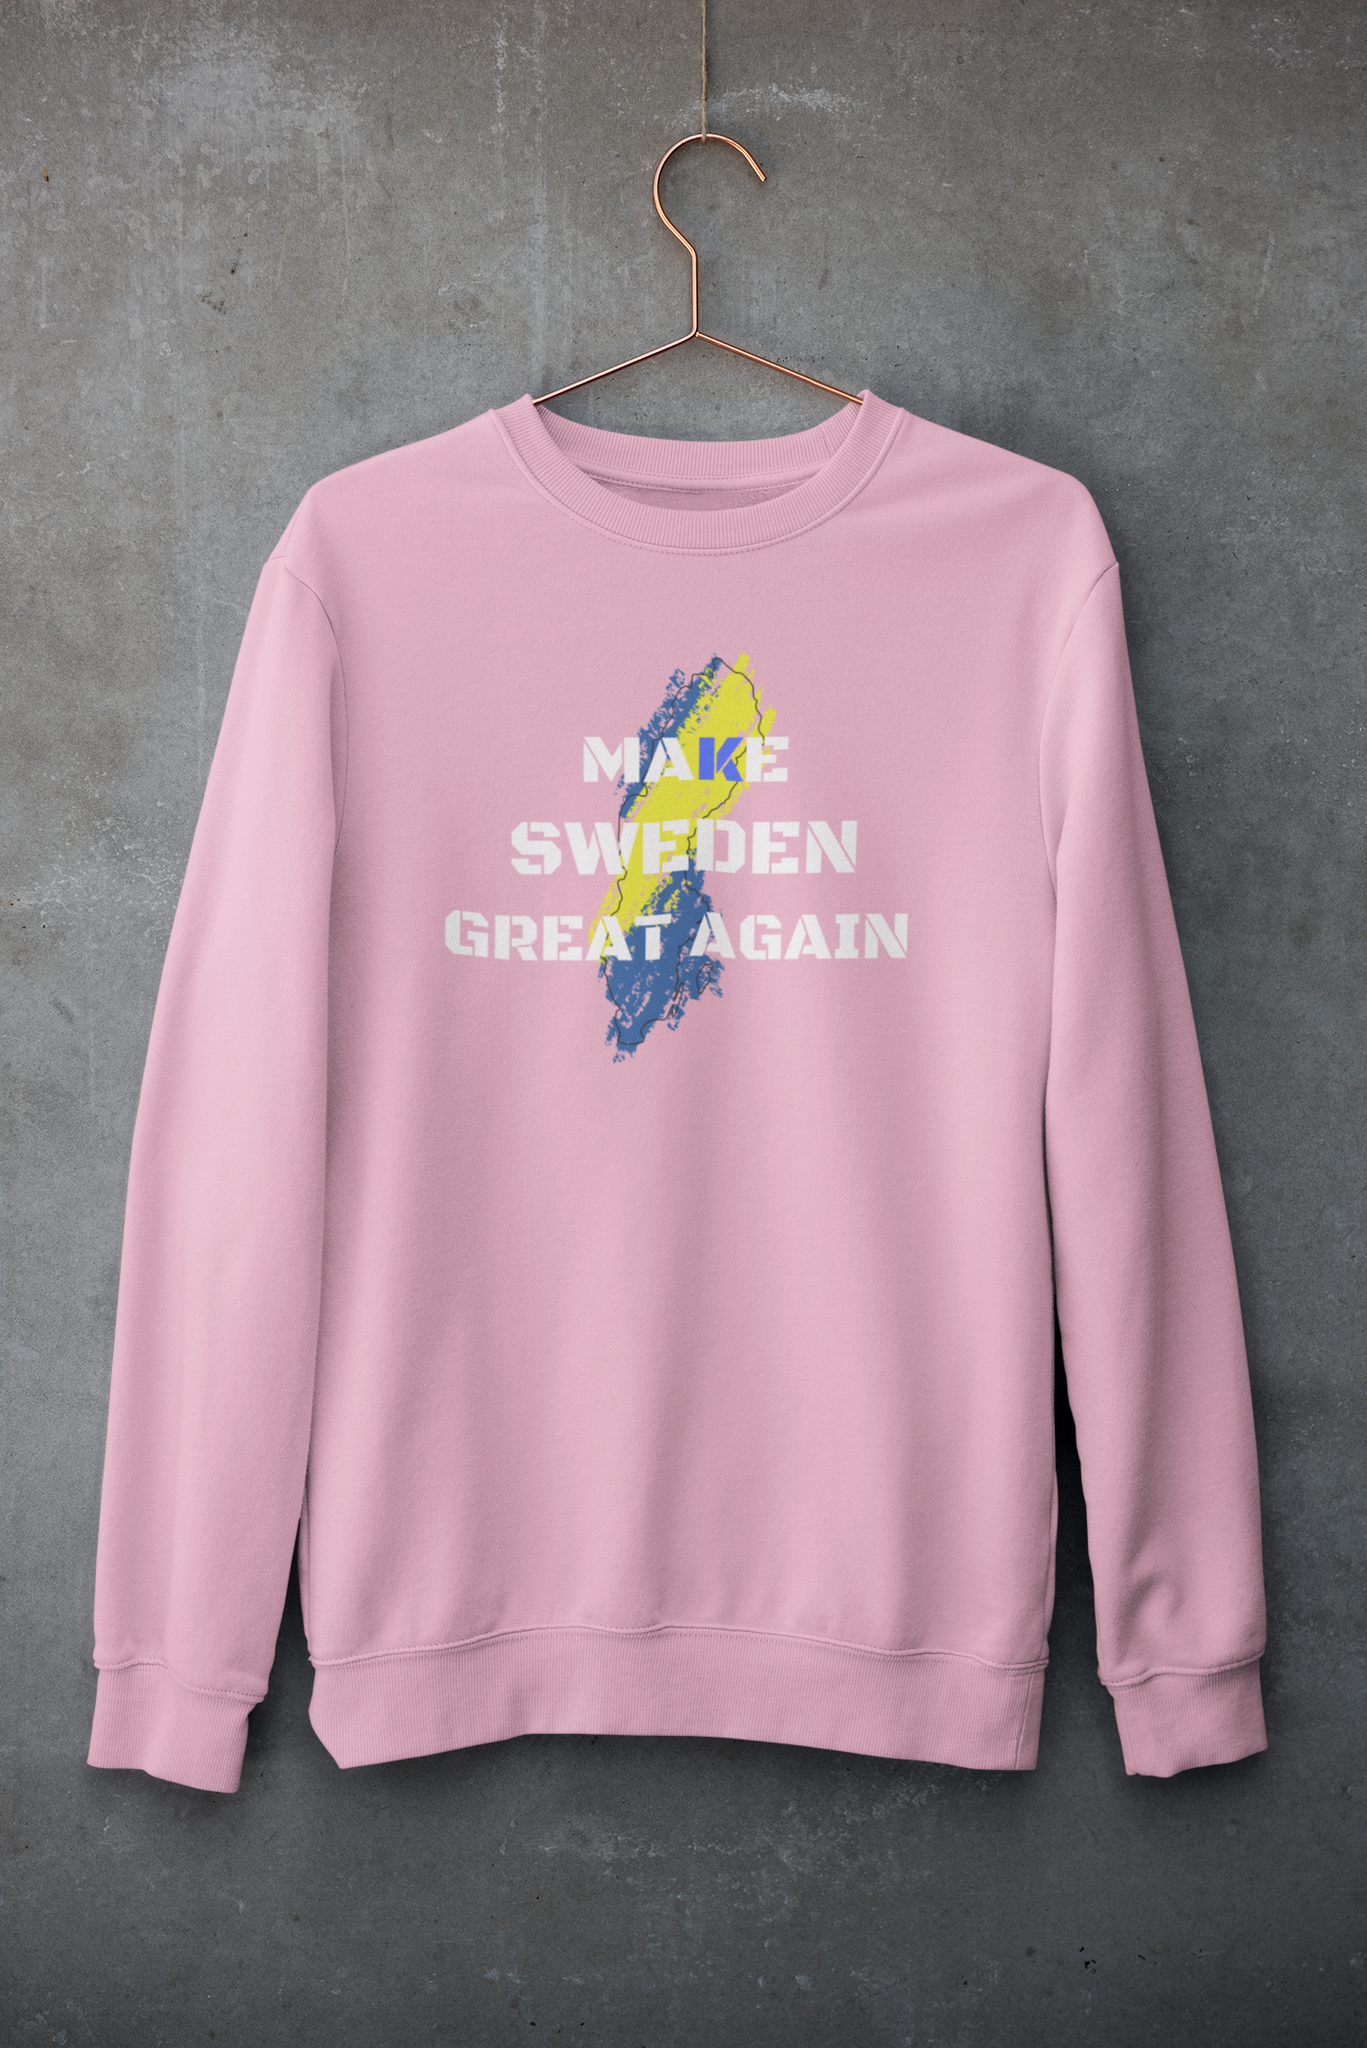 Make Sweden Great Again Sweatshirt Unisex